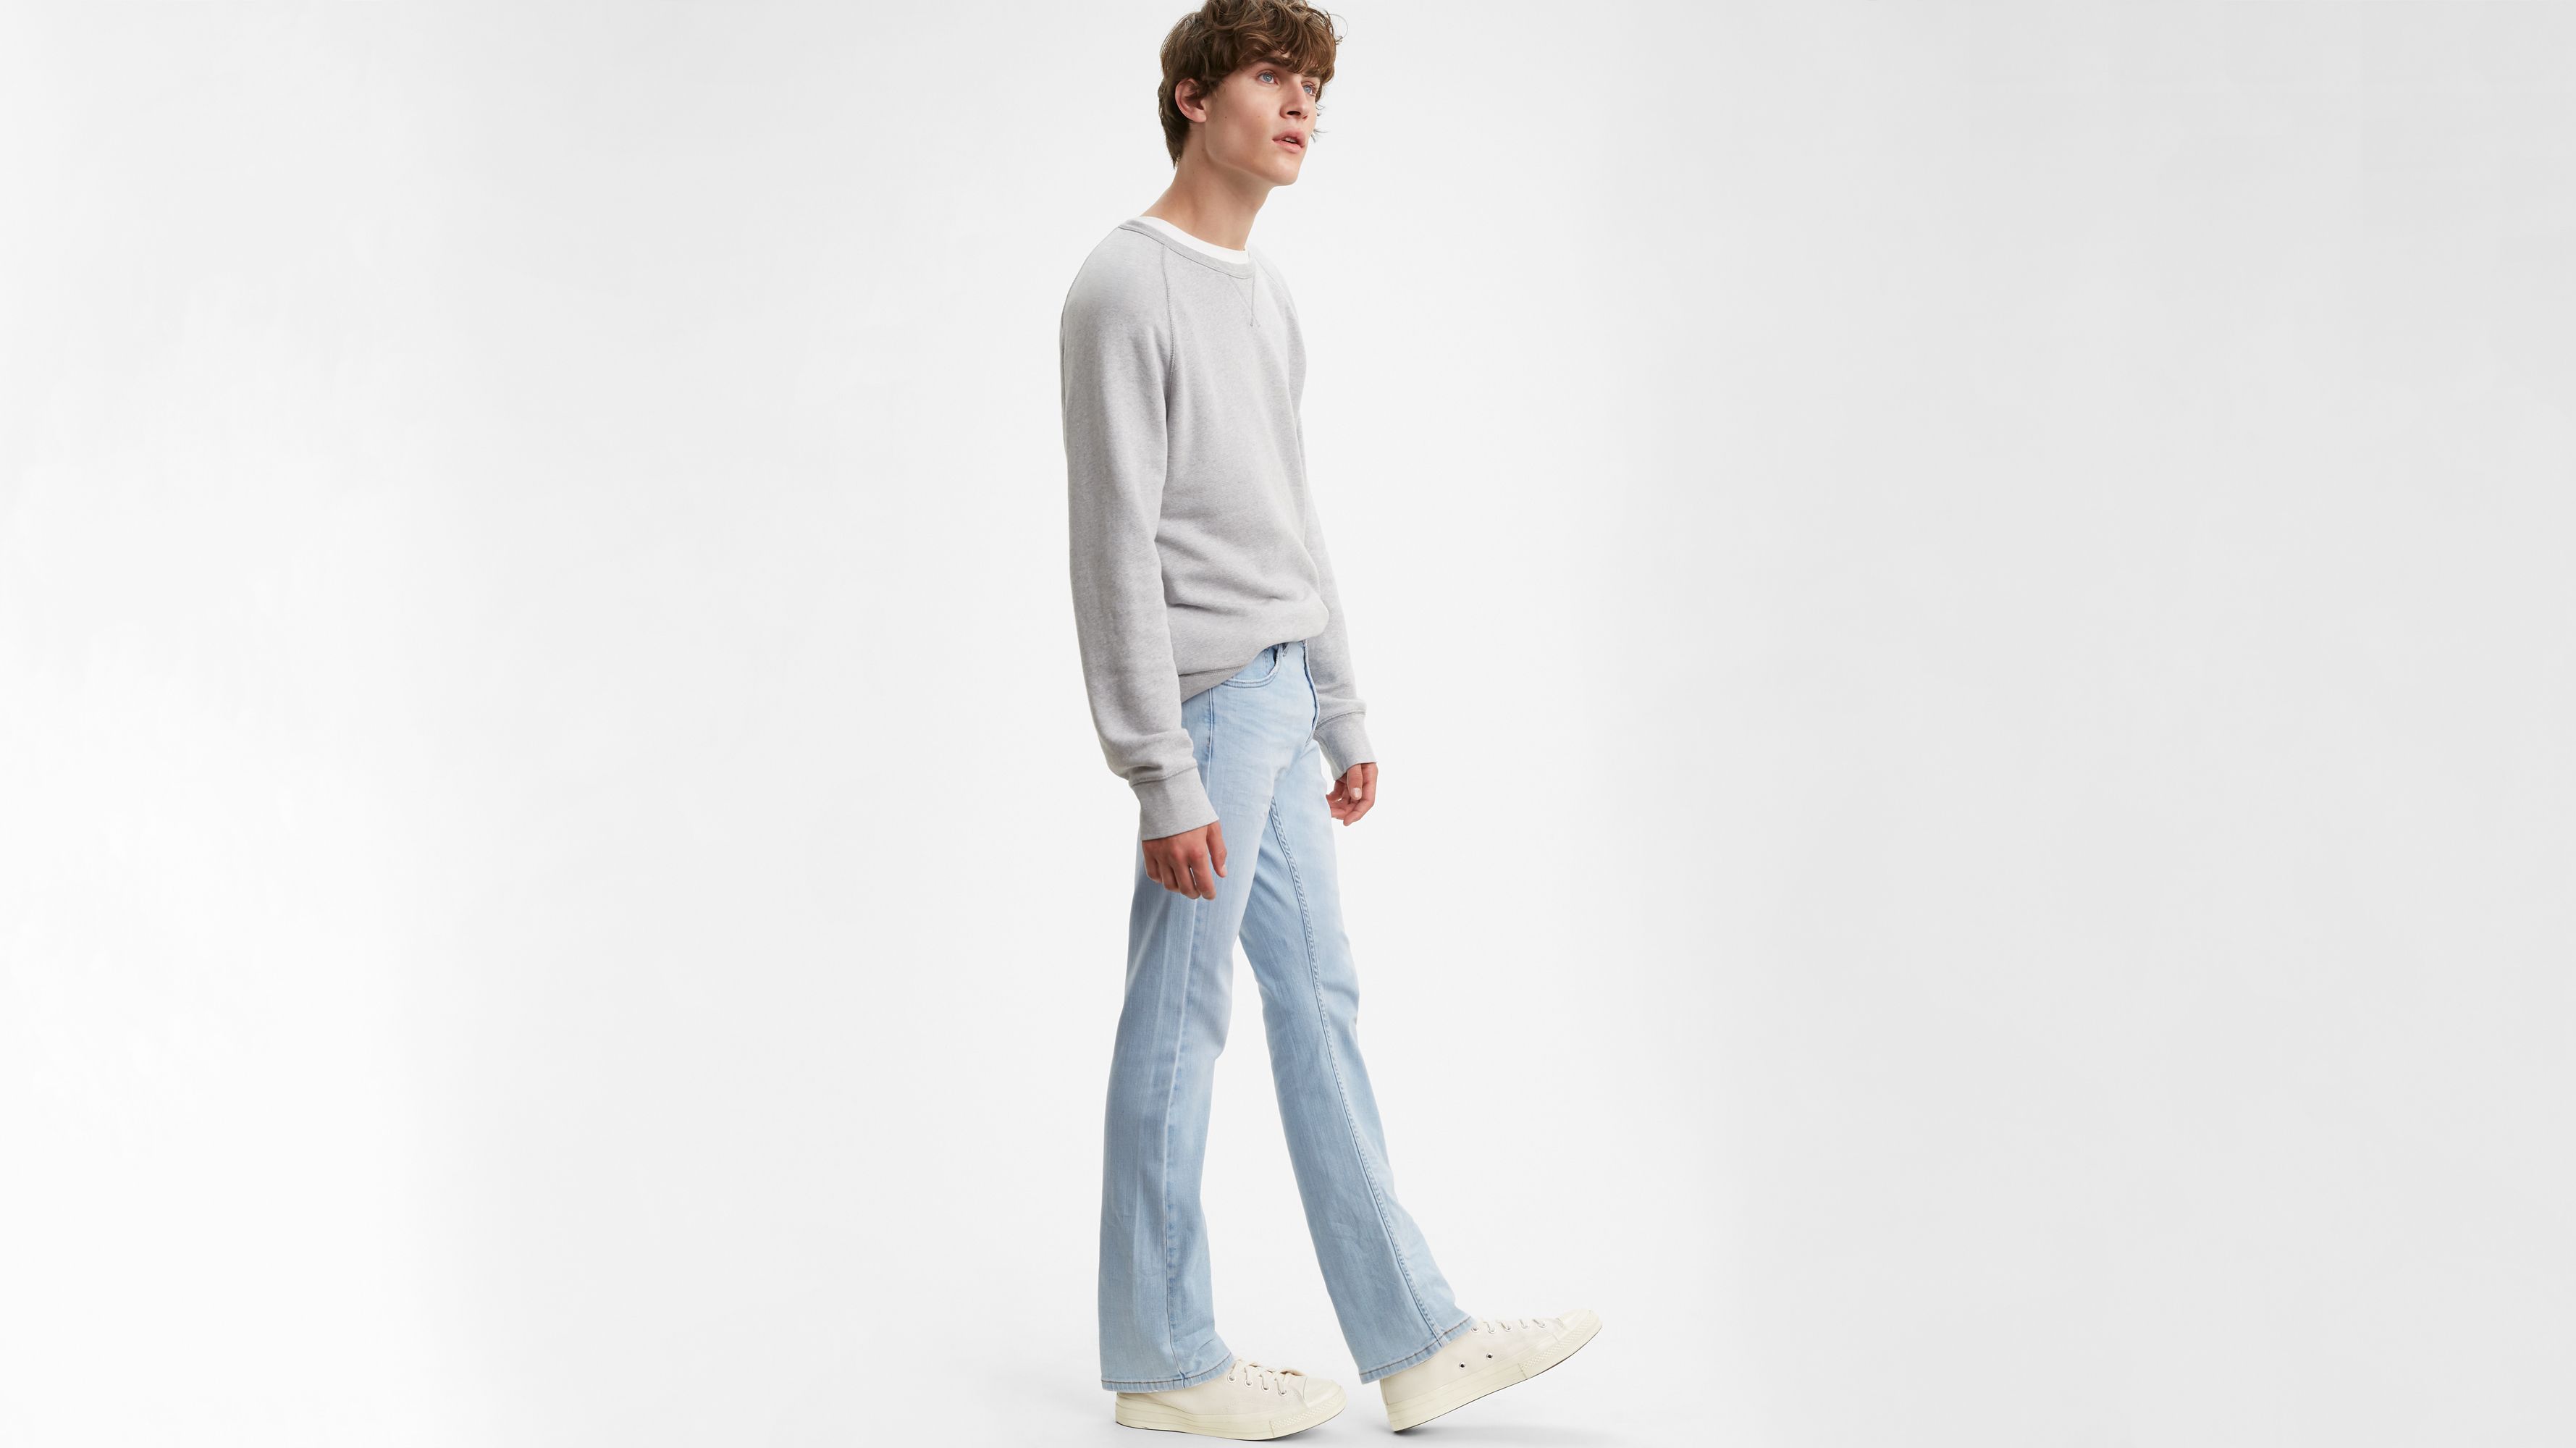 levi strauss 527 jeans